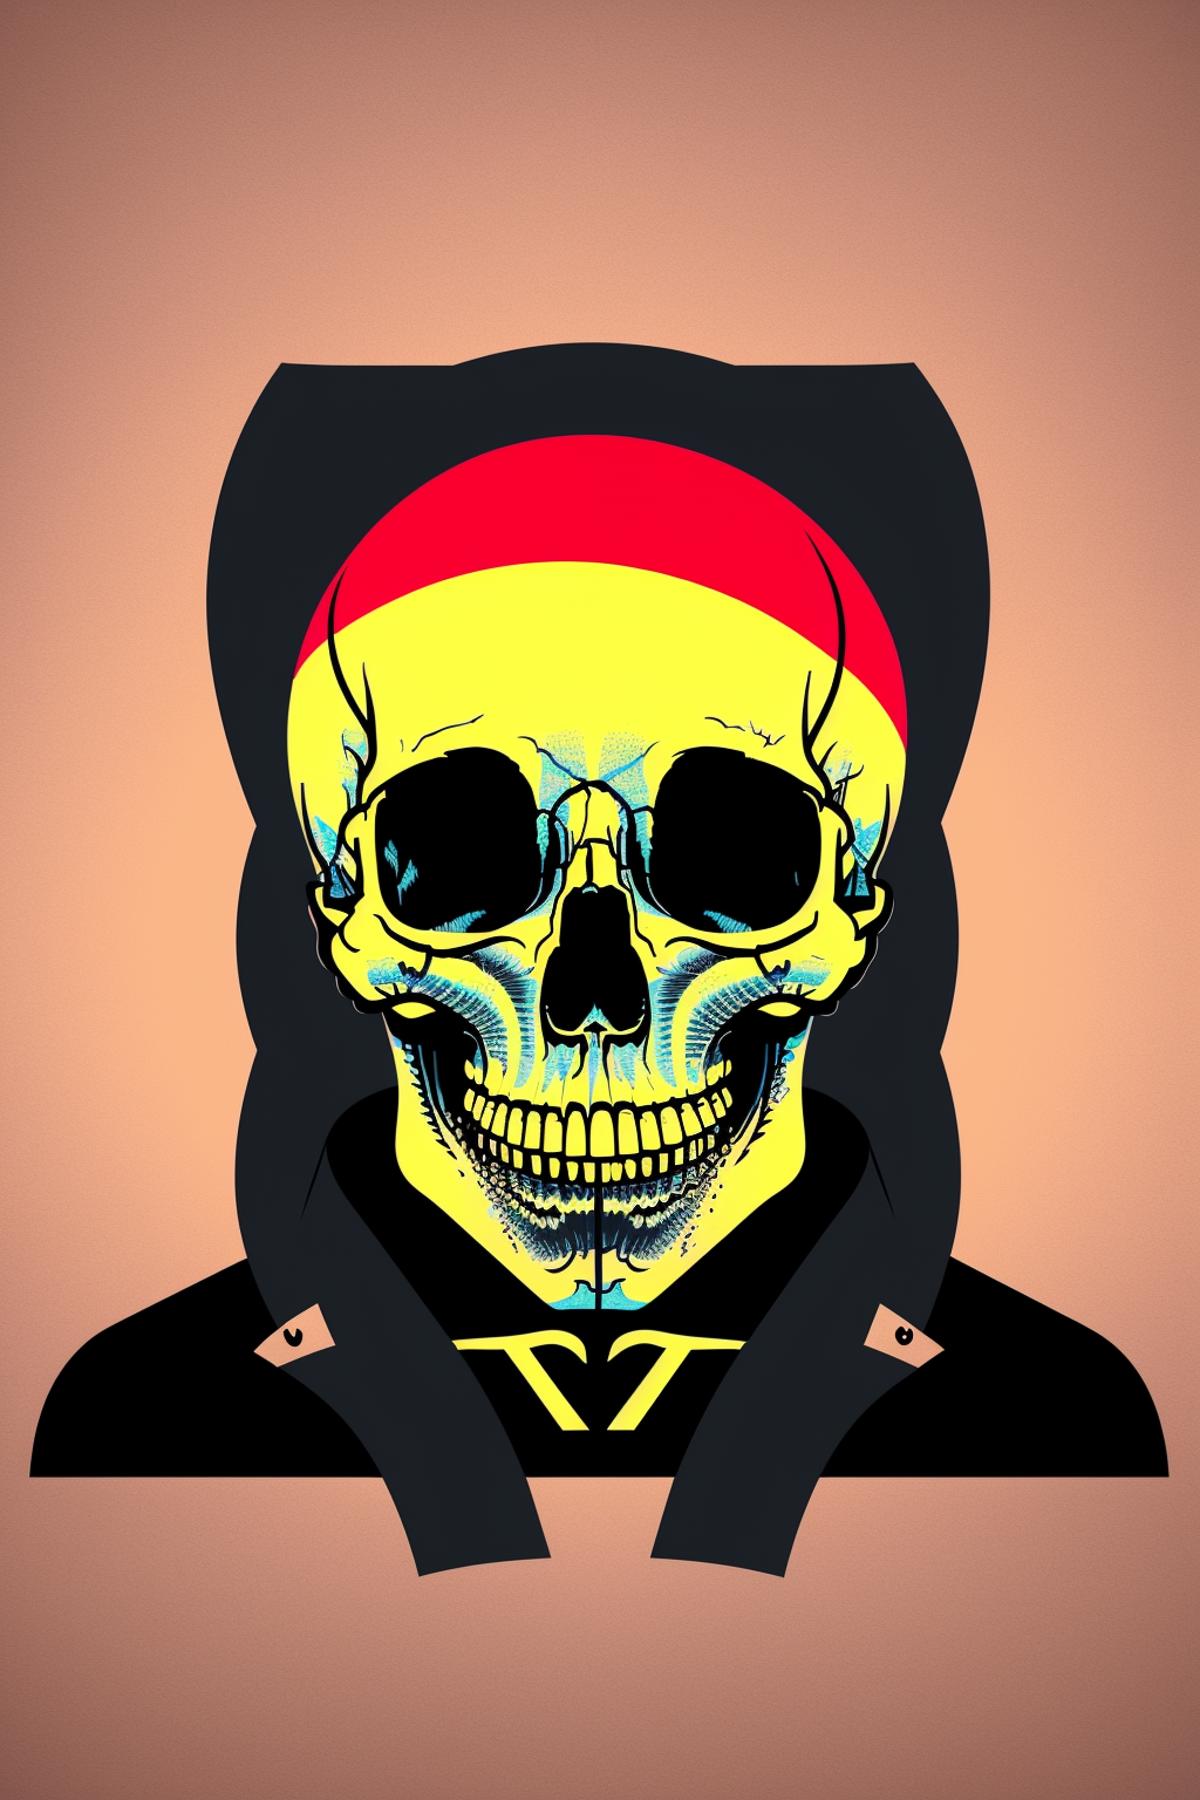 Skull Graphics image by Ciro_Negrogni